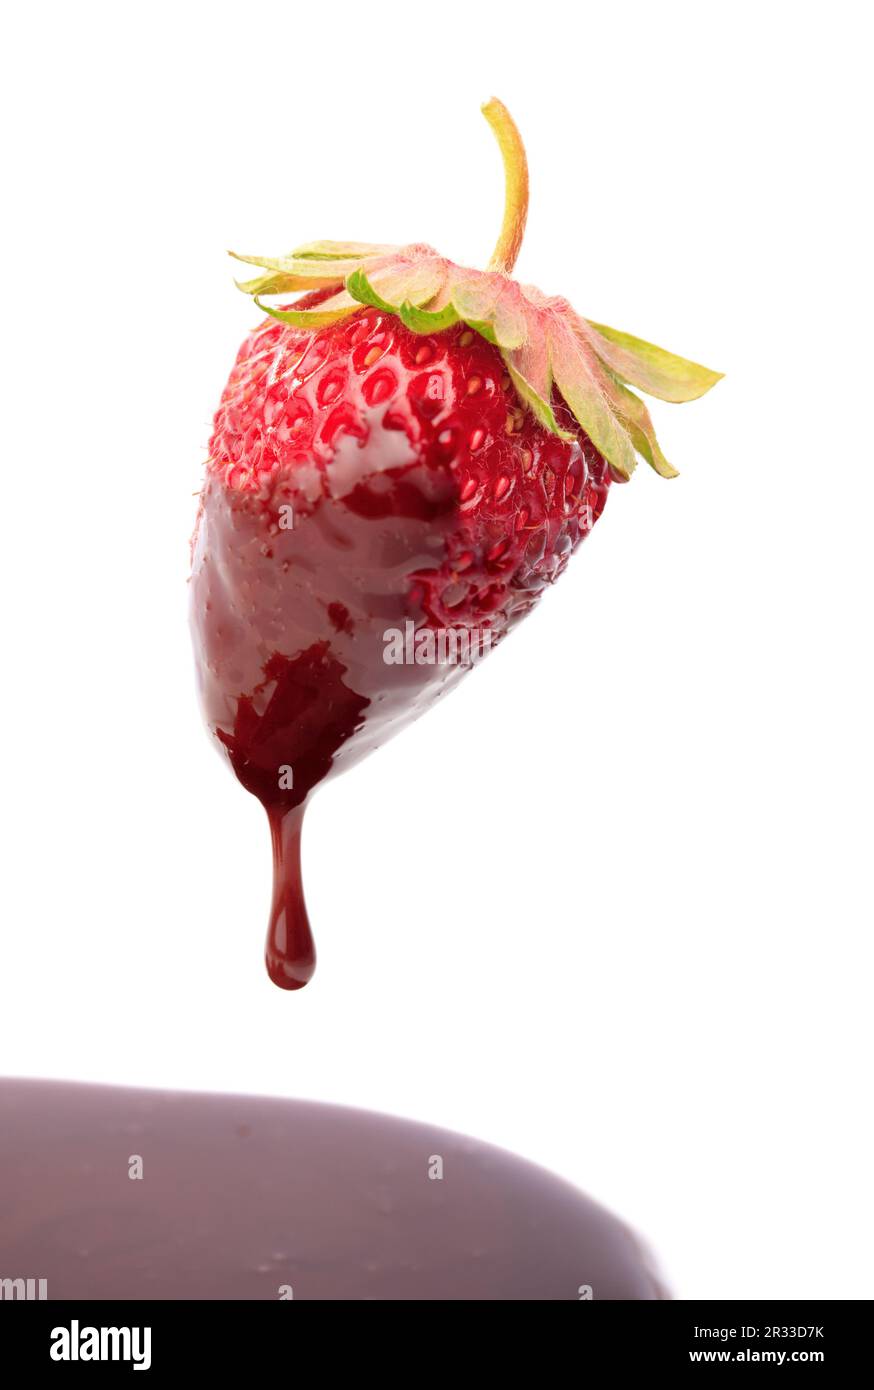 Strawberry and chocolate Stock Photo